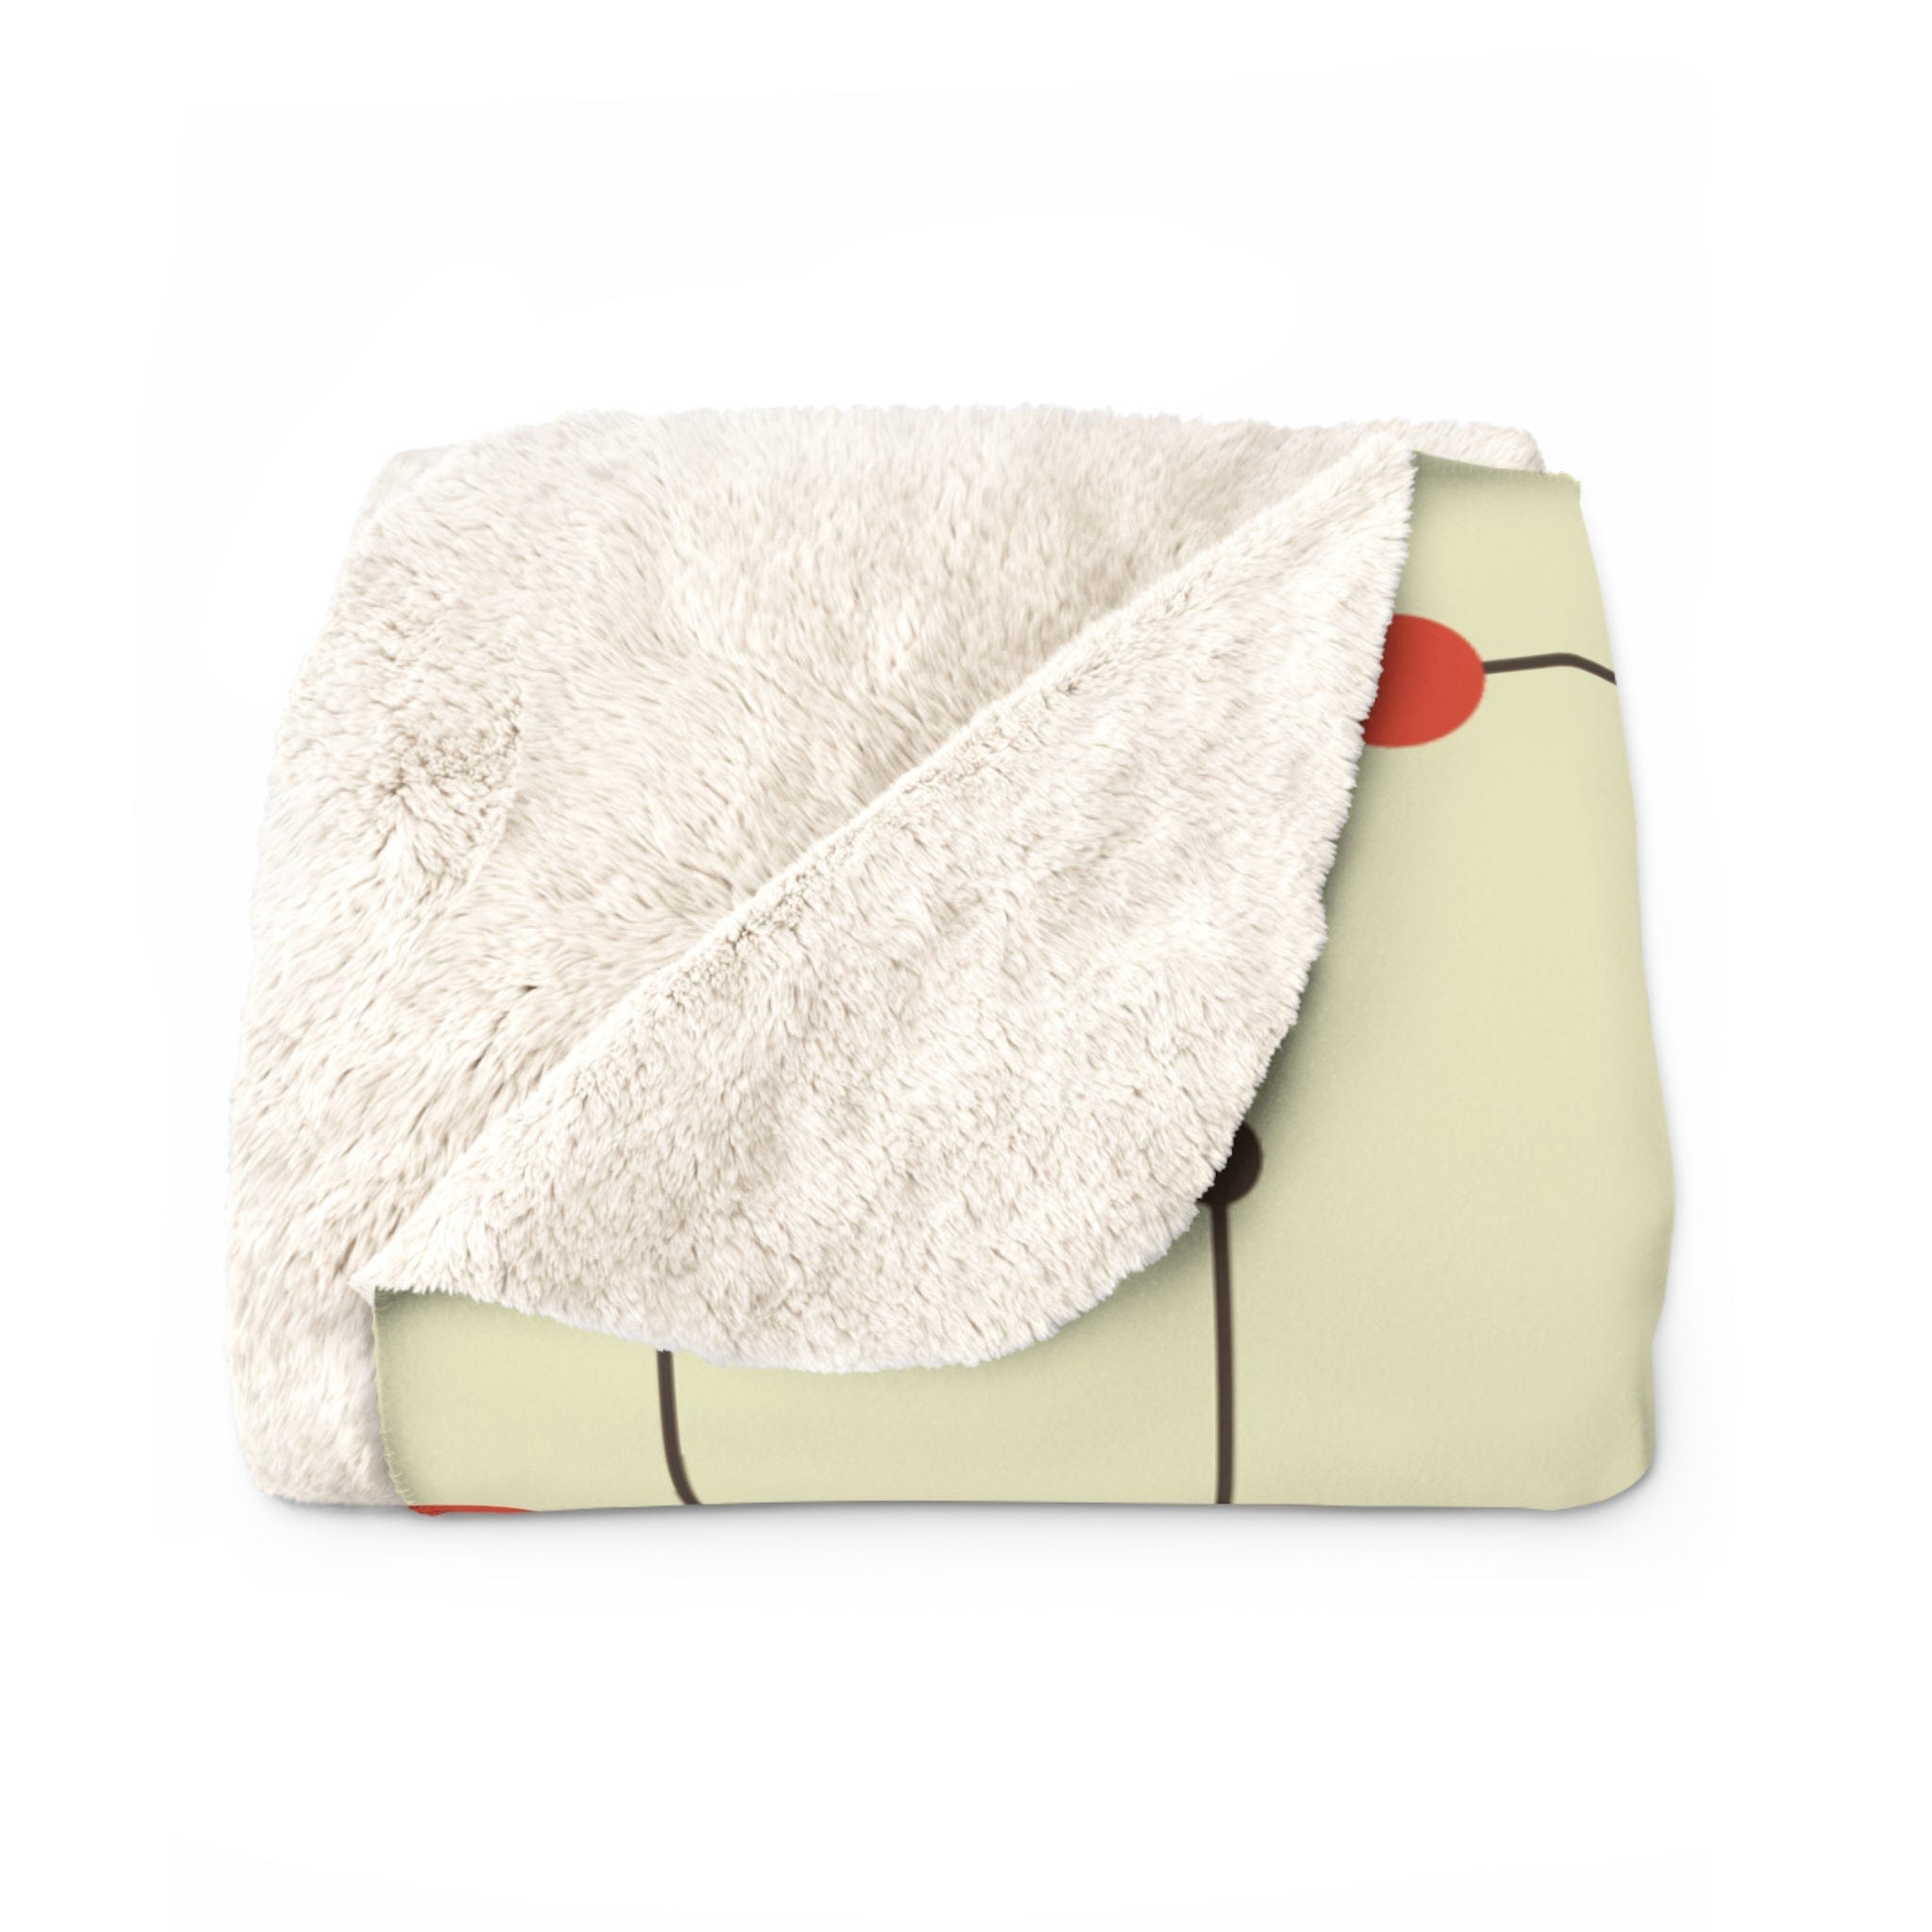 Printify Geometric Starburst Mid Century Modern Blanket - Retro Sherpa Fleece Home Decor